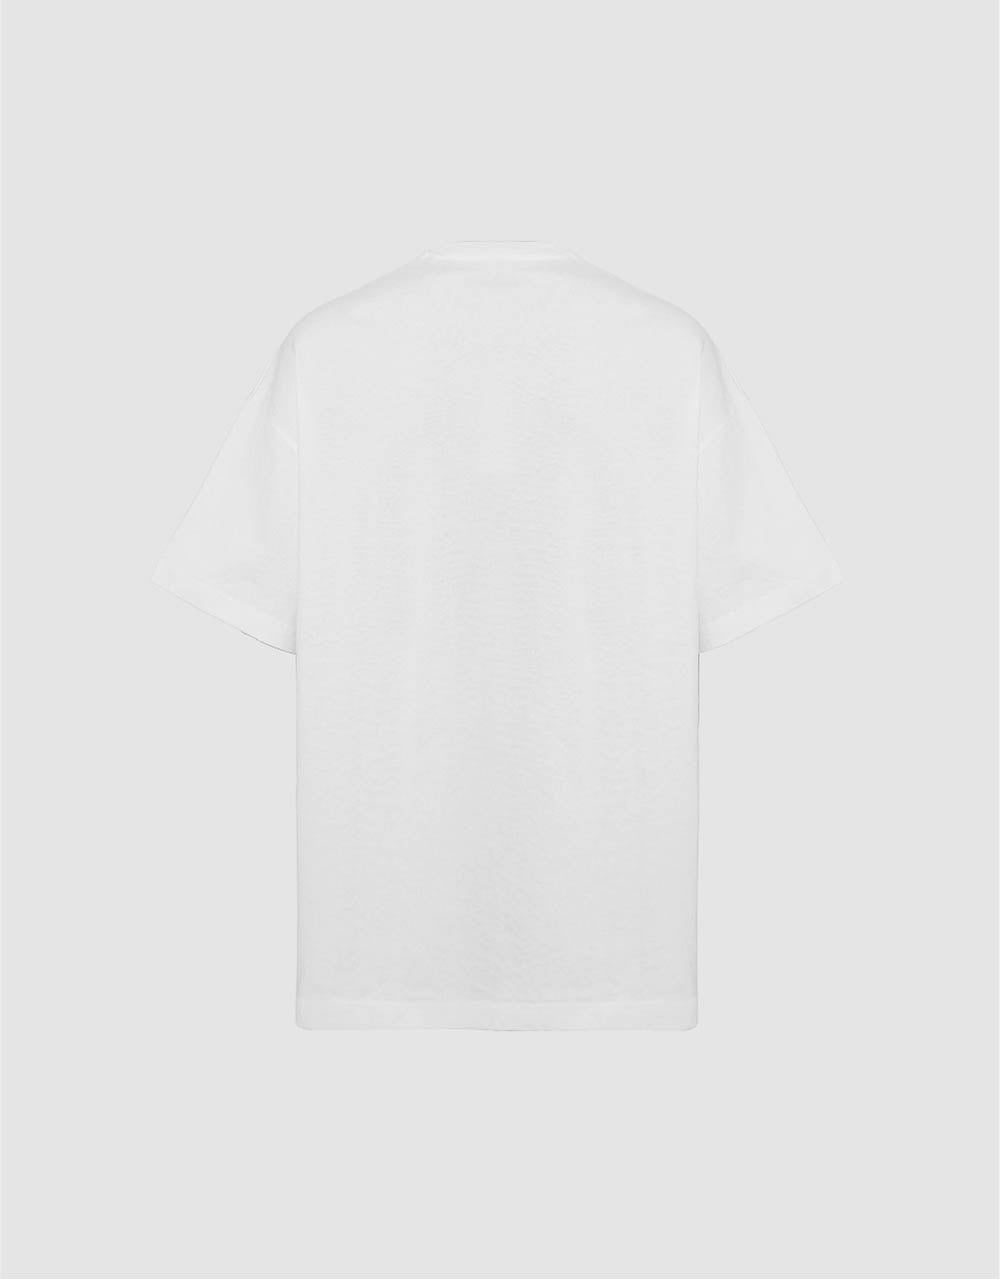 Printed Crew Neck T-Shirt